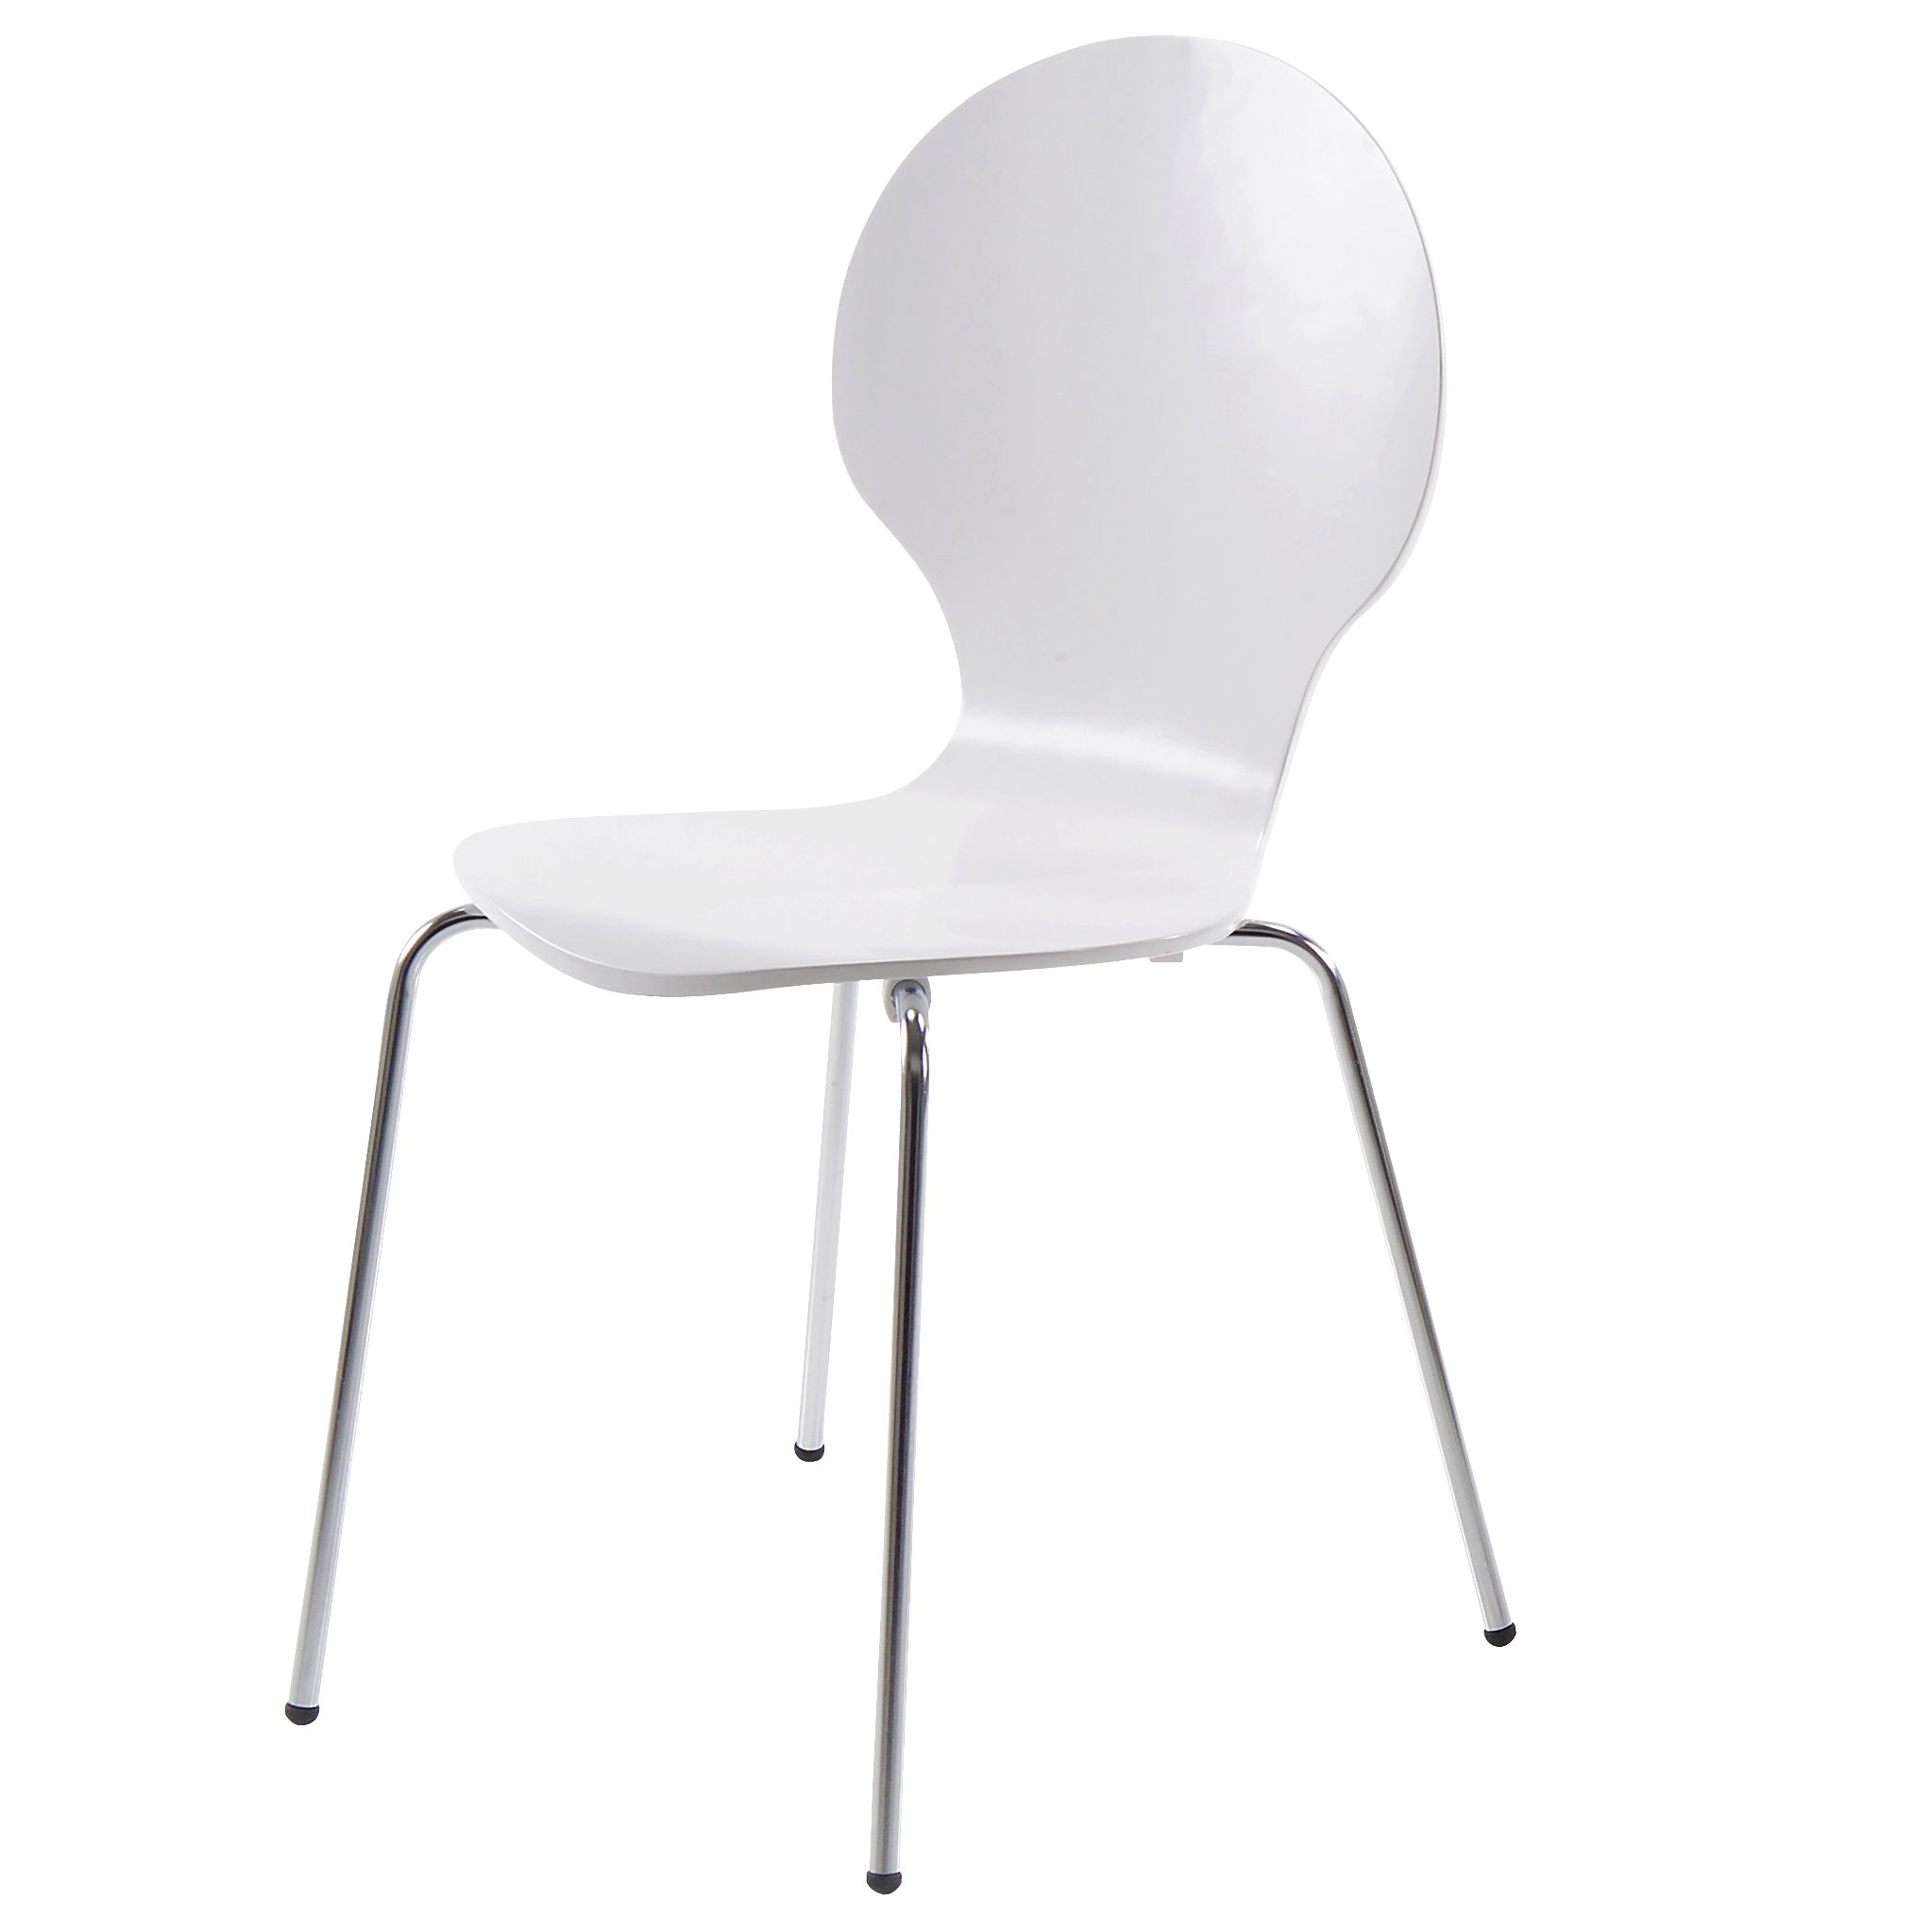 John Lewis Value Curve Chair, White